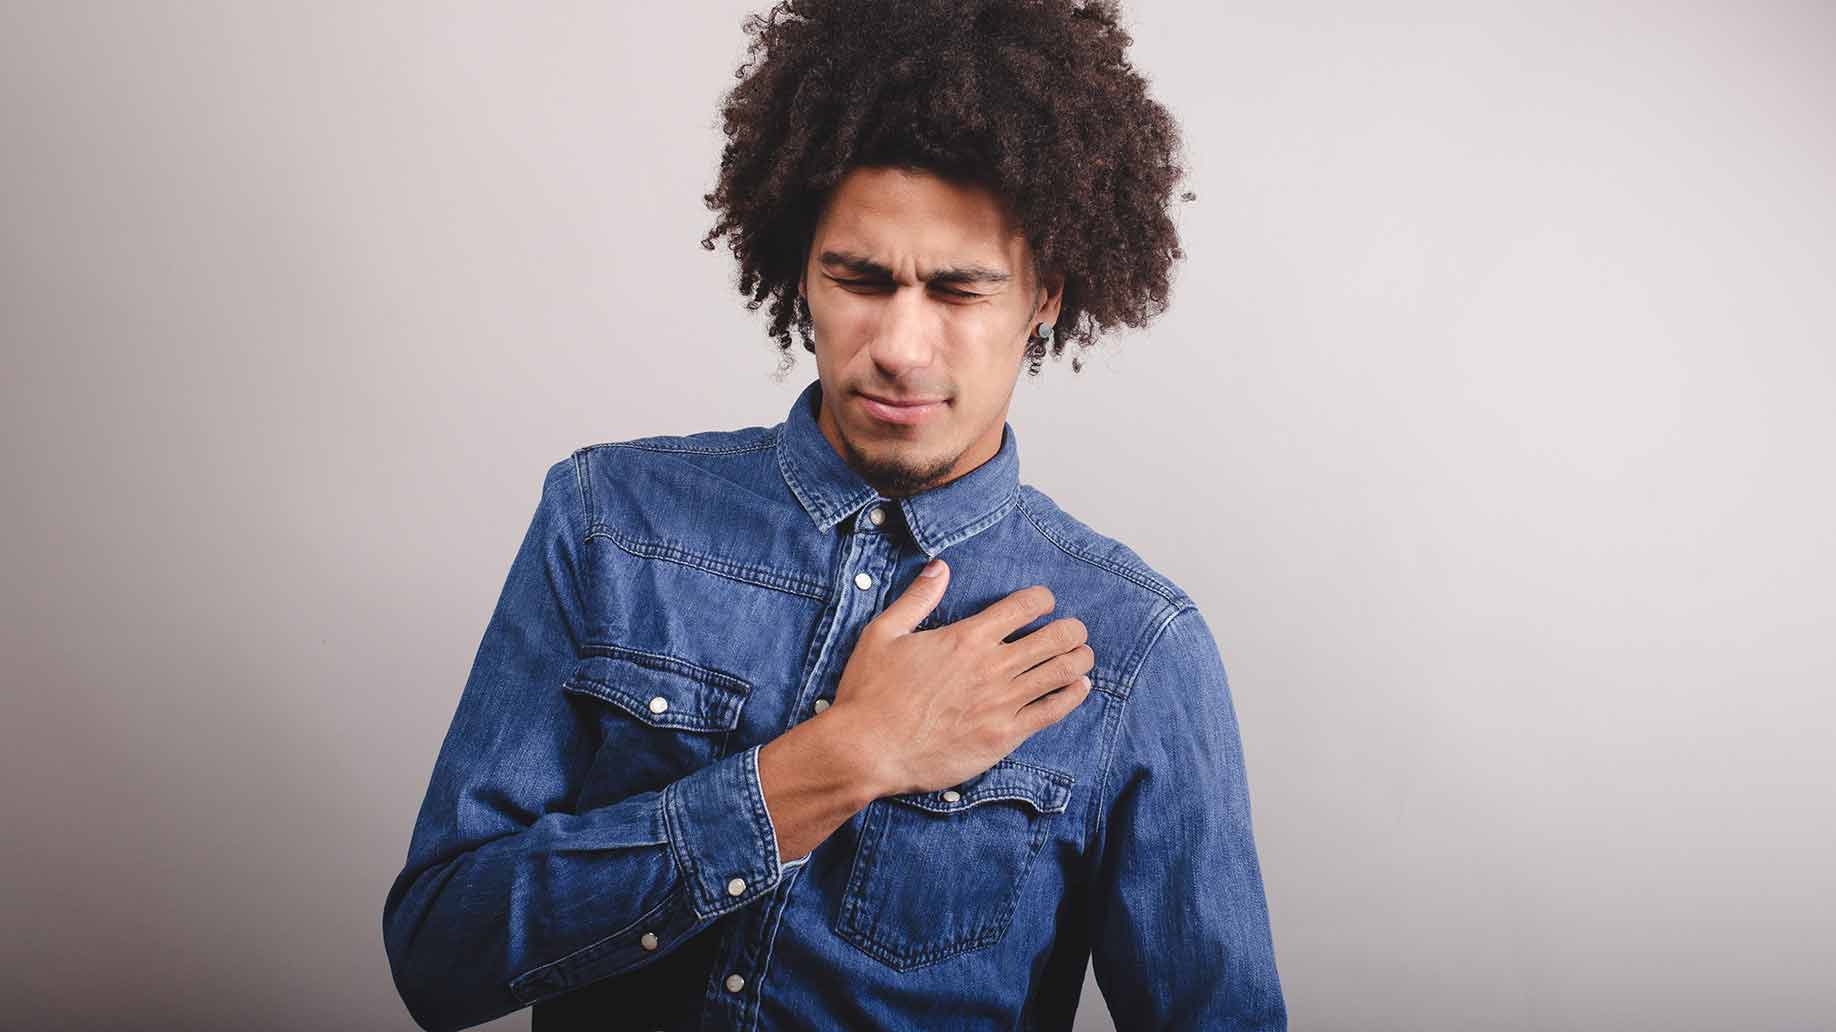 heartburn acid reflux gerd burning chest pain nausea